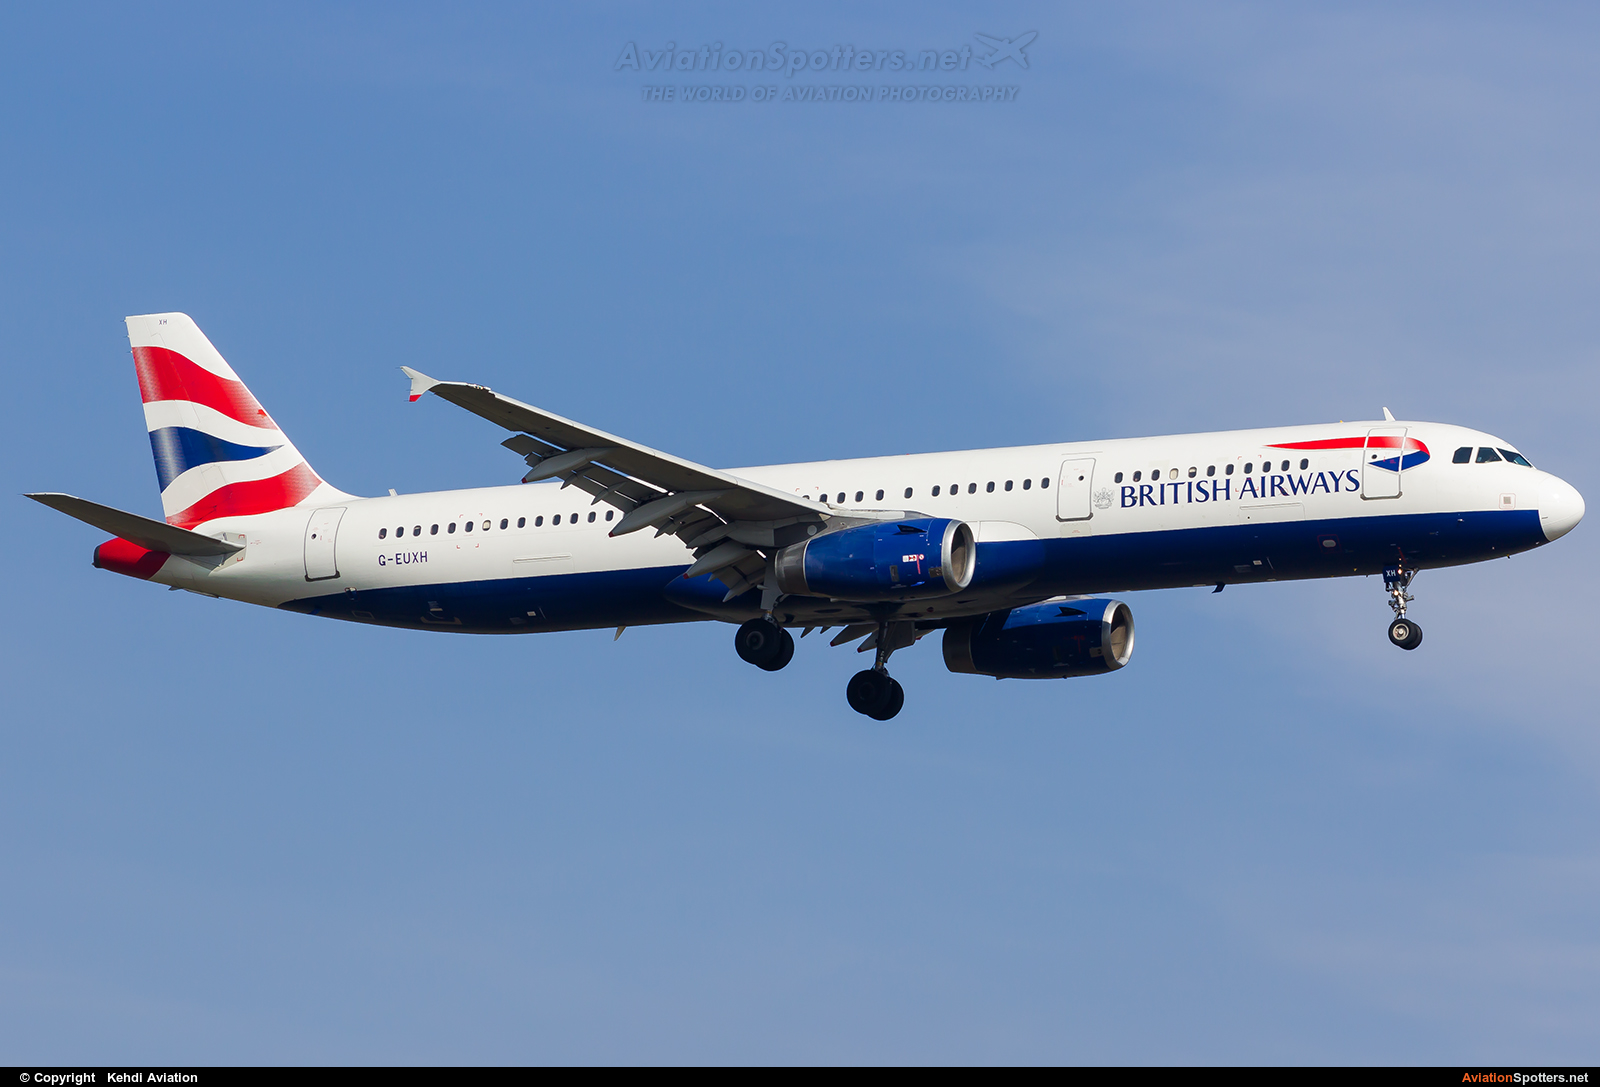 British Airways  -  A321-231  (G-EUXH) By Kehdi Aviation (Kehdi Aviation)